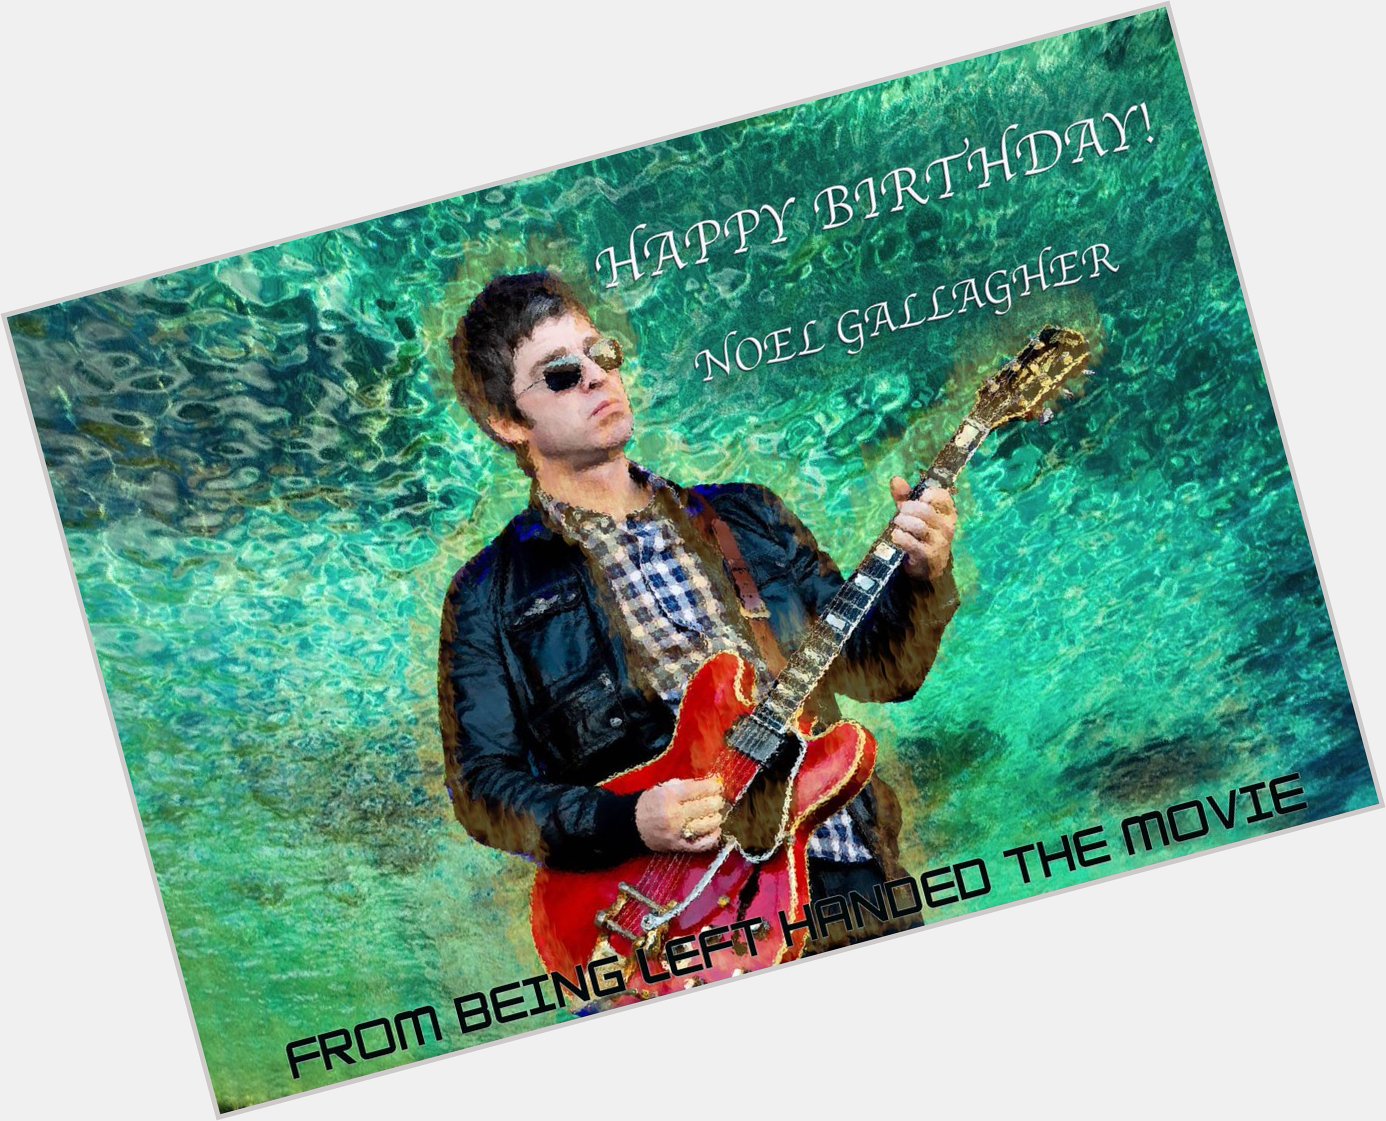 Wishing Noel Gallagher a Left-Handed Happy Birthday! 